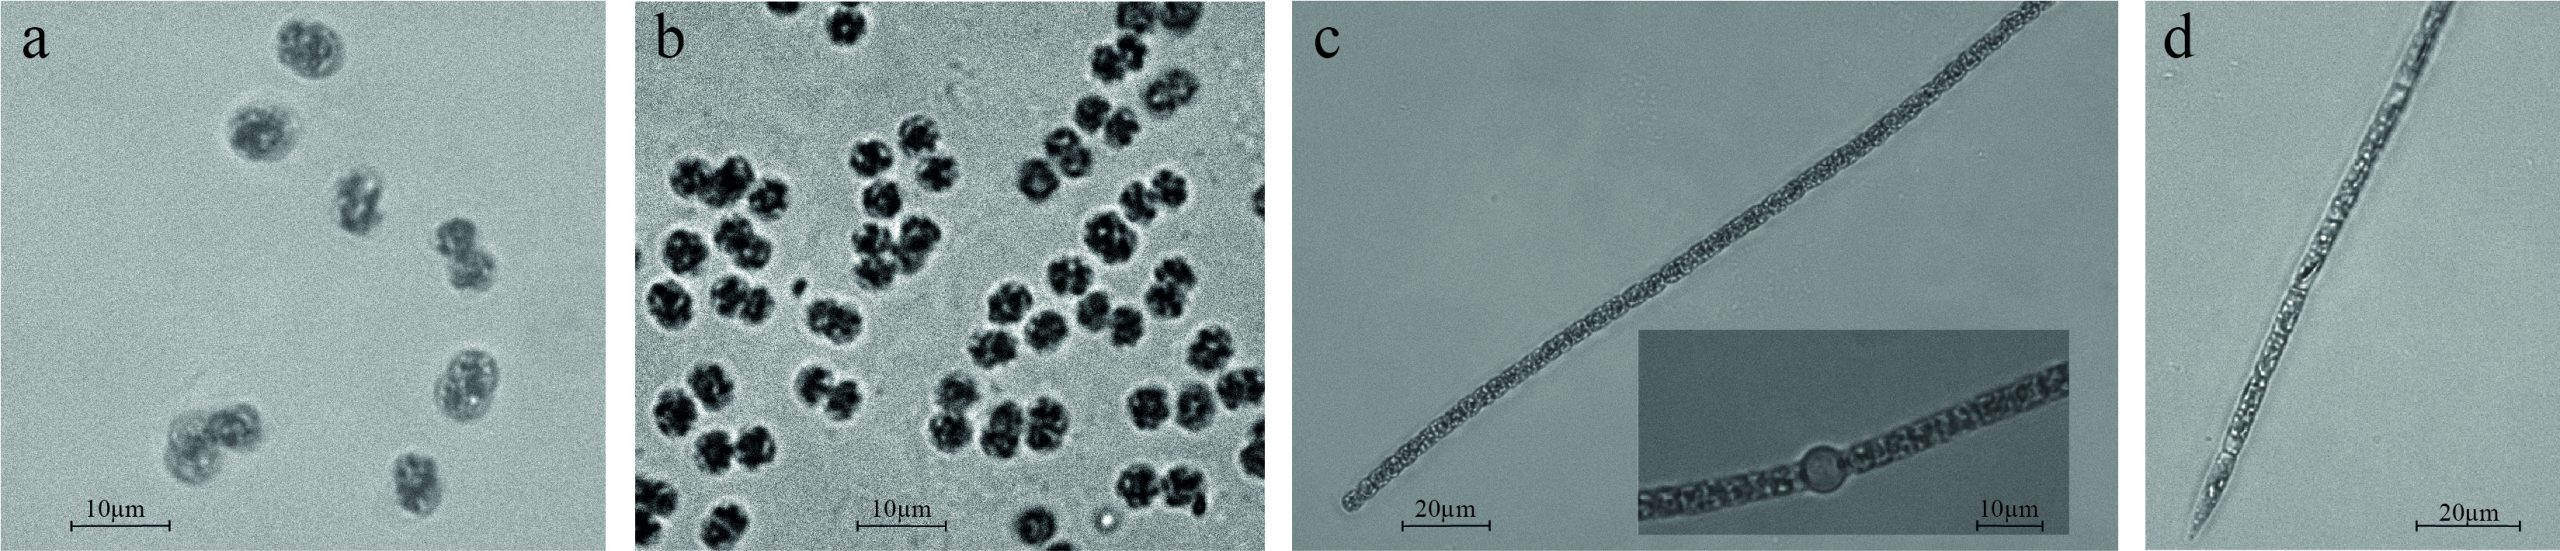 Micrographs of selected Cyanobacterial strains